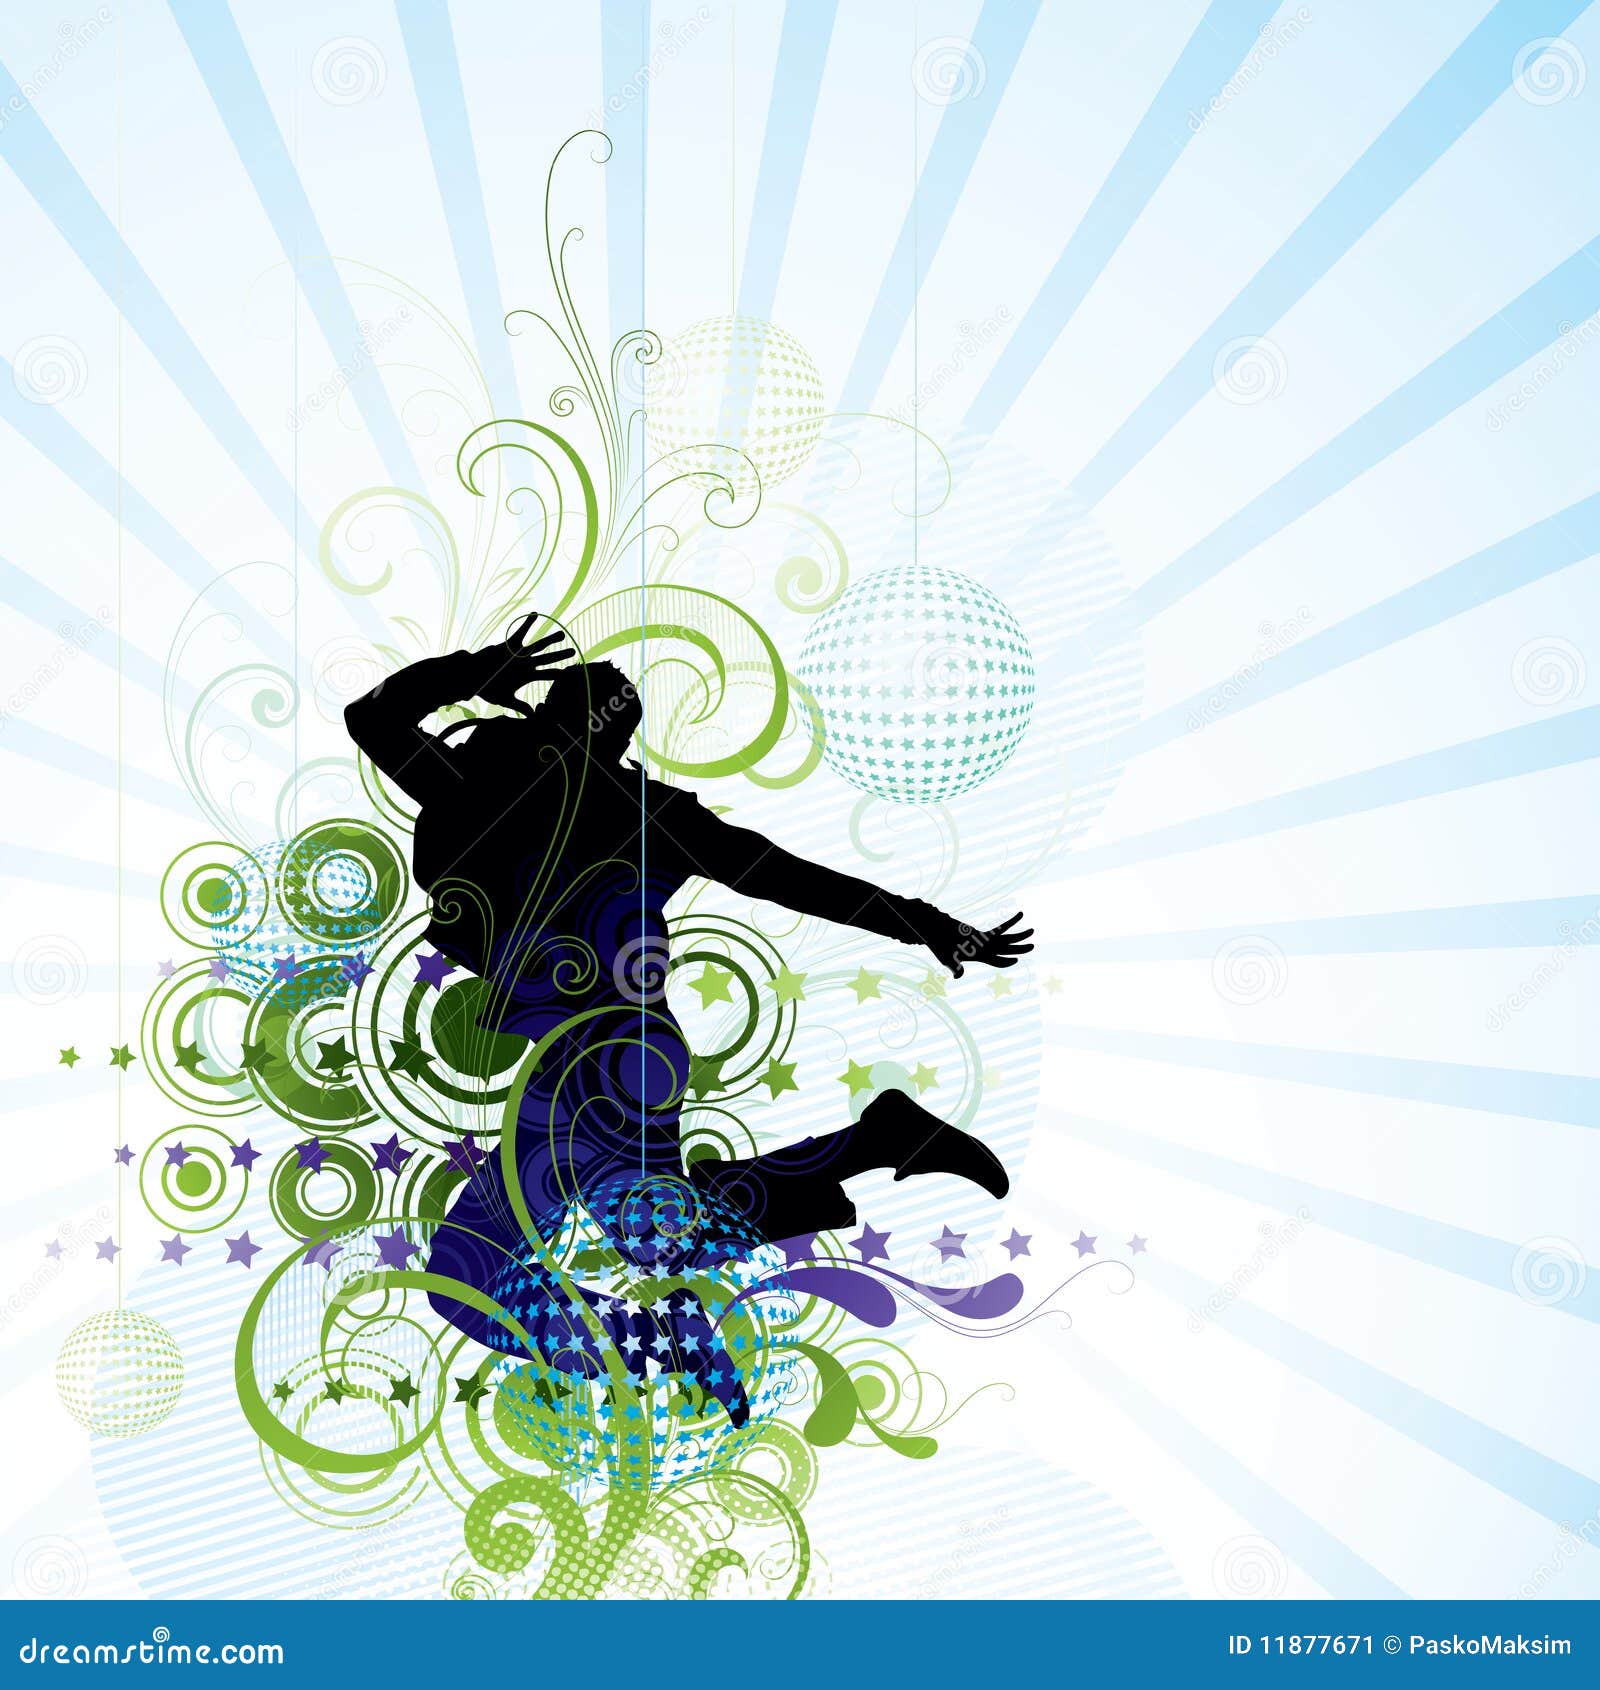 Artistic Man Jumping Poster Stock Vector - Illustration of dancer ...